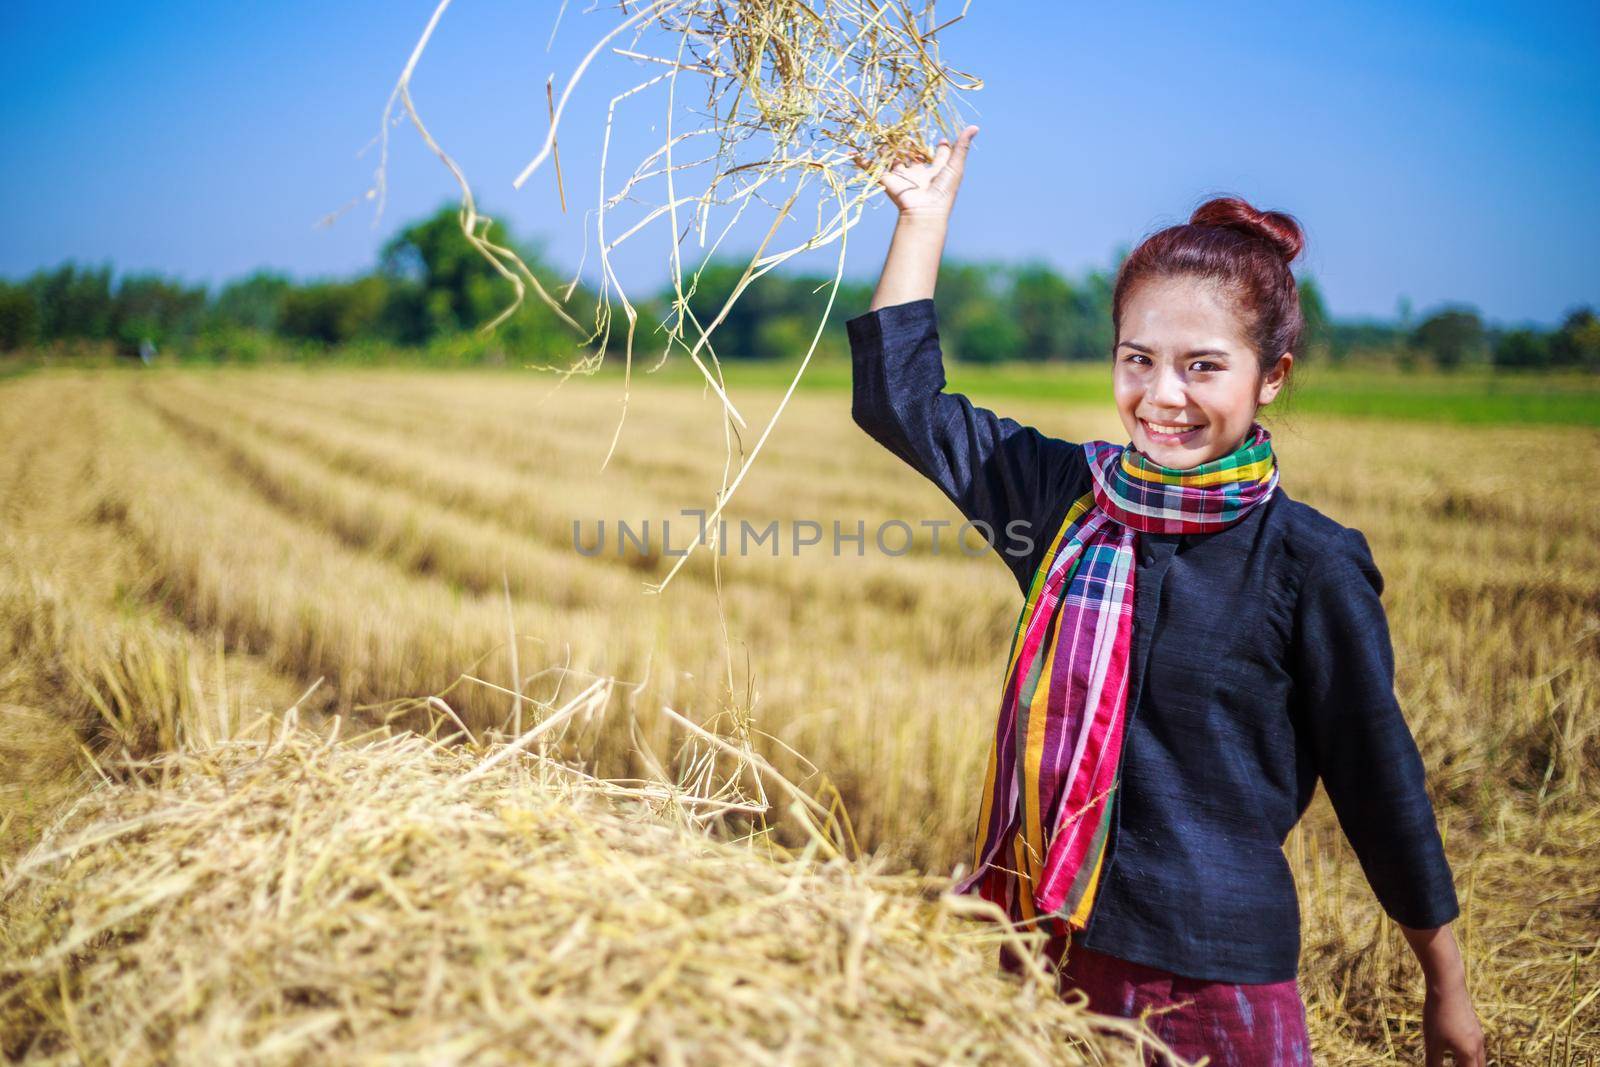 farmer woman relaxing with the straw in field by geargodz